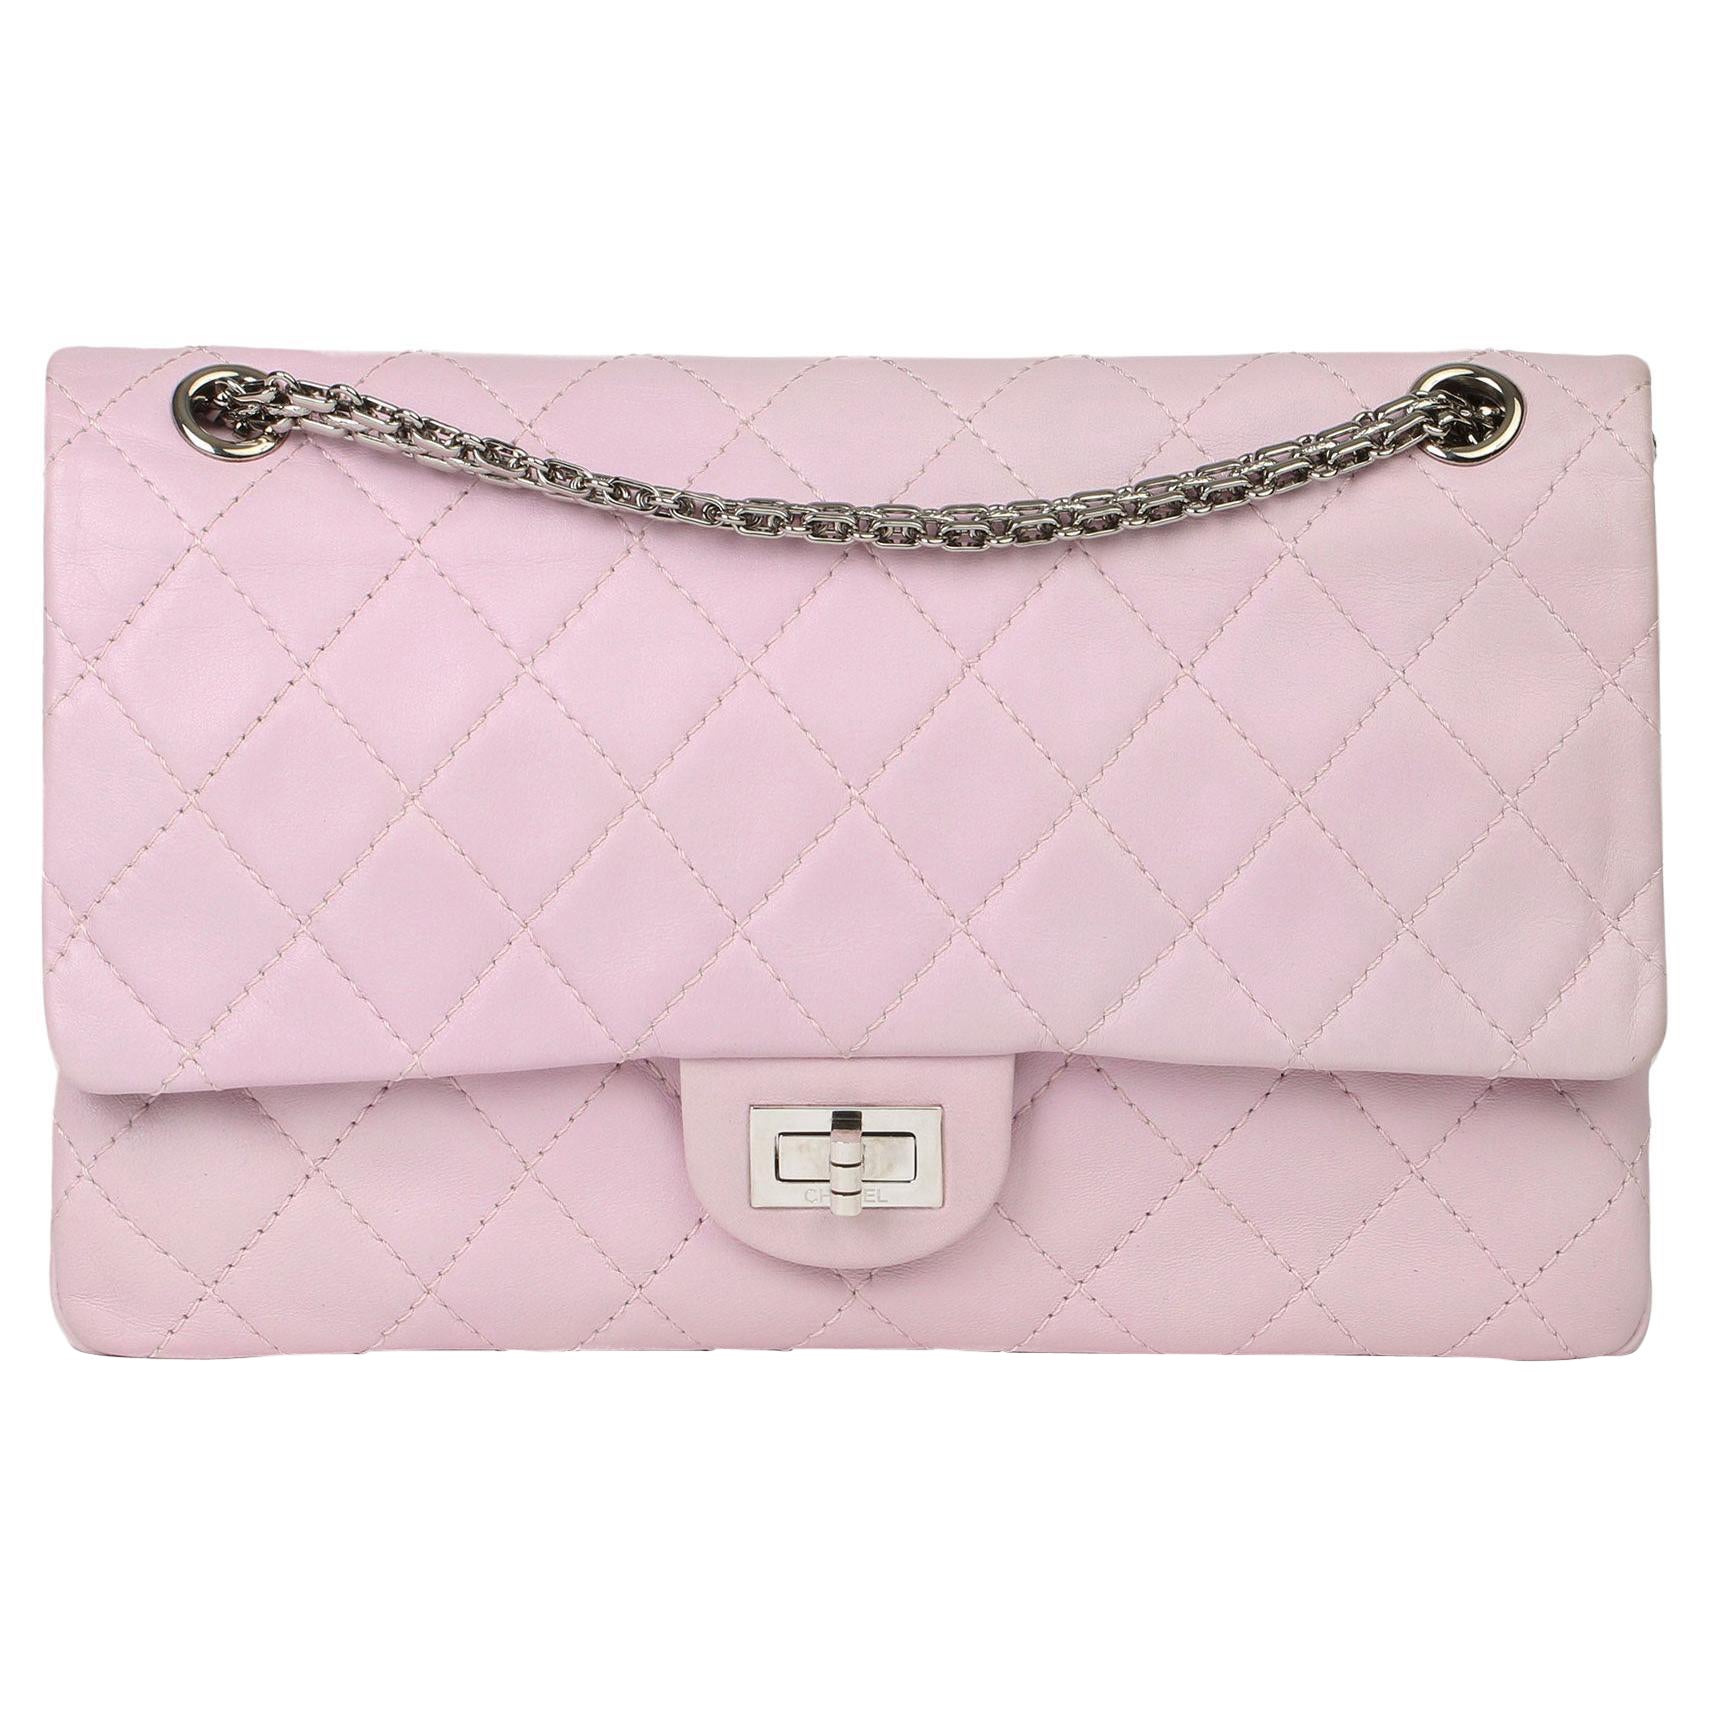 2009 Chanel Sakura Pink Quilted Lambskin 2.55 Reissue 226 Flap Bag